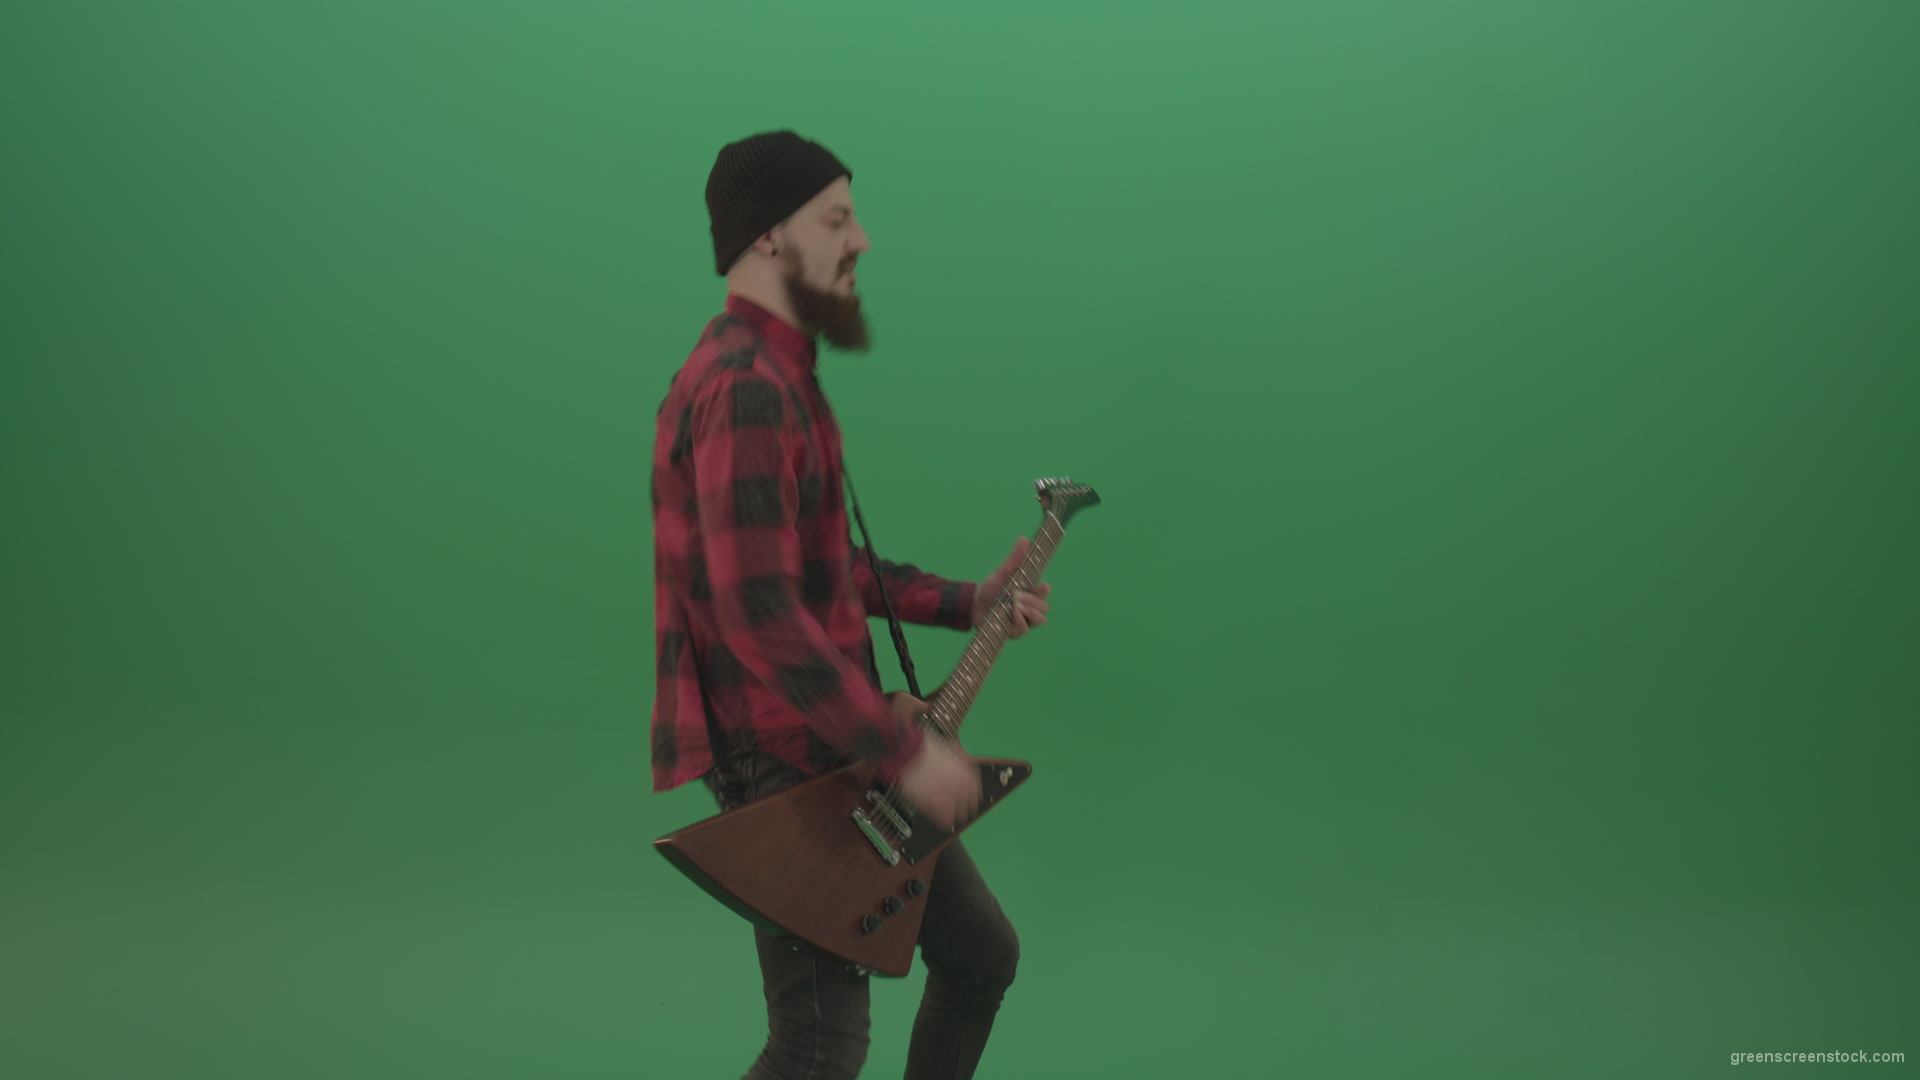 Man-punk-hardrock-guitarist-playing-guitar-in-side-view-in-green-screen-studio_005 Green Screen Stock